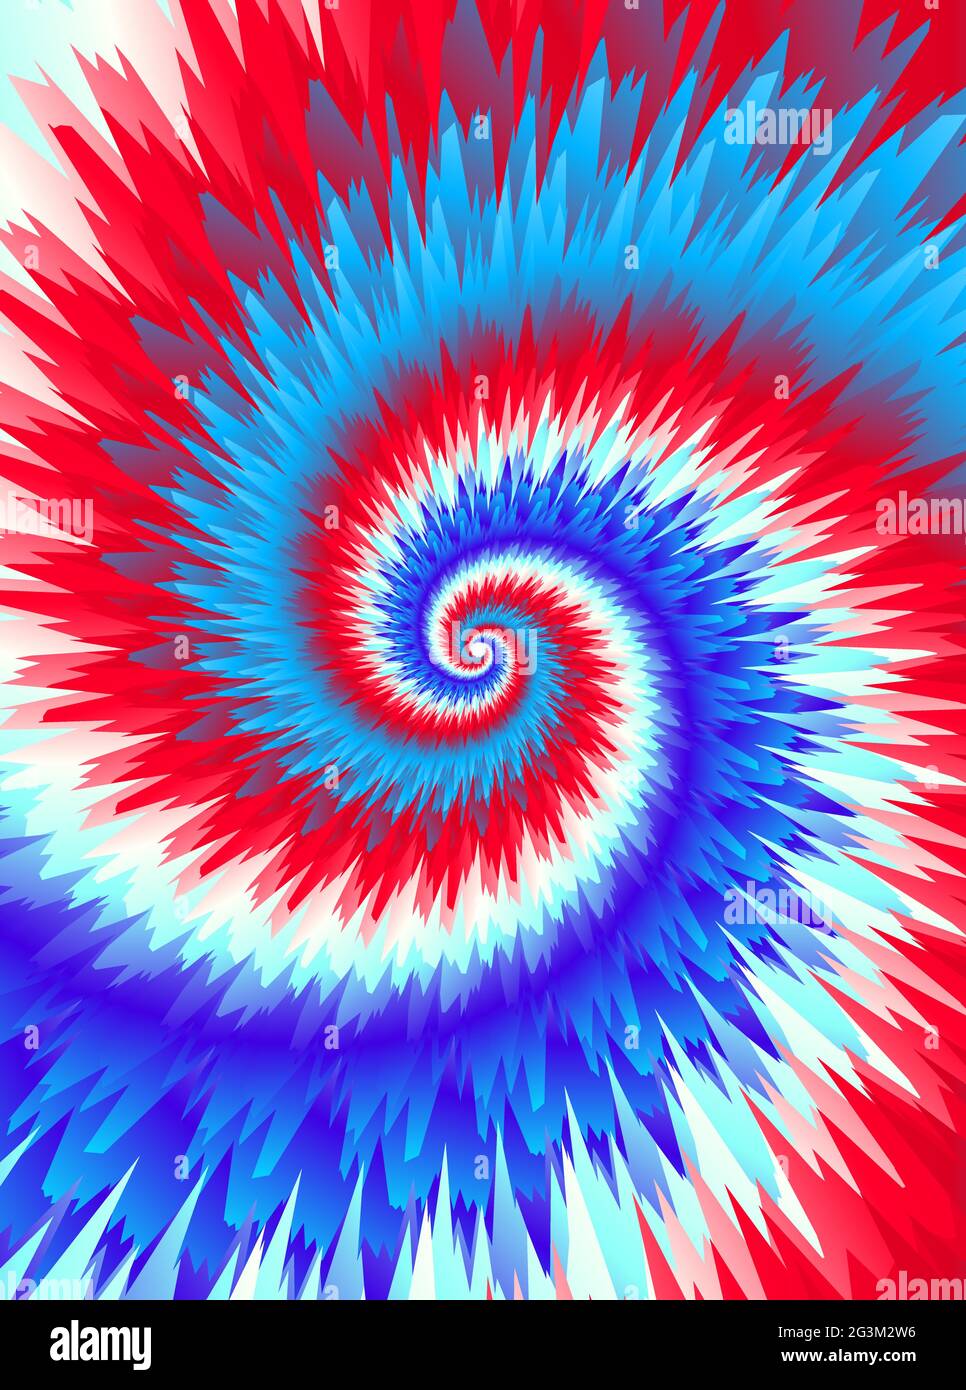 Abstrakt festlich bunten Hintergrund, hellen Regenbogen multicolor Tie Dye Muster, Vektor-Illustration. Crazy Boho Spiral Swirl Lackdruck. Rot und blu Stock Vektor